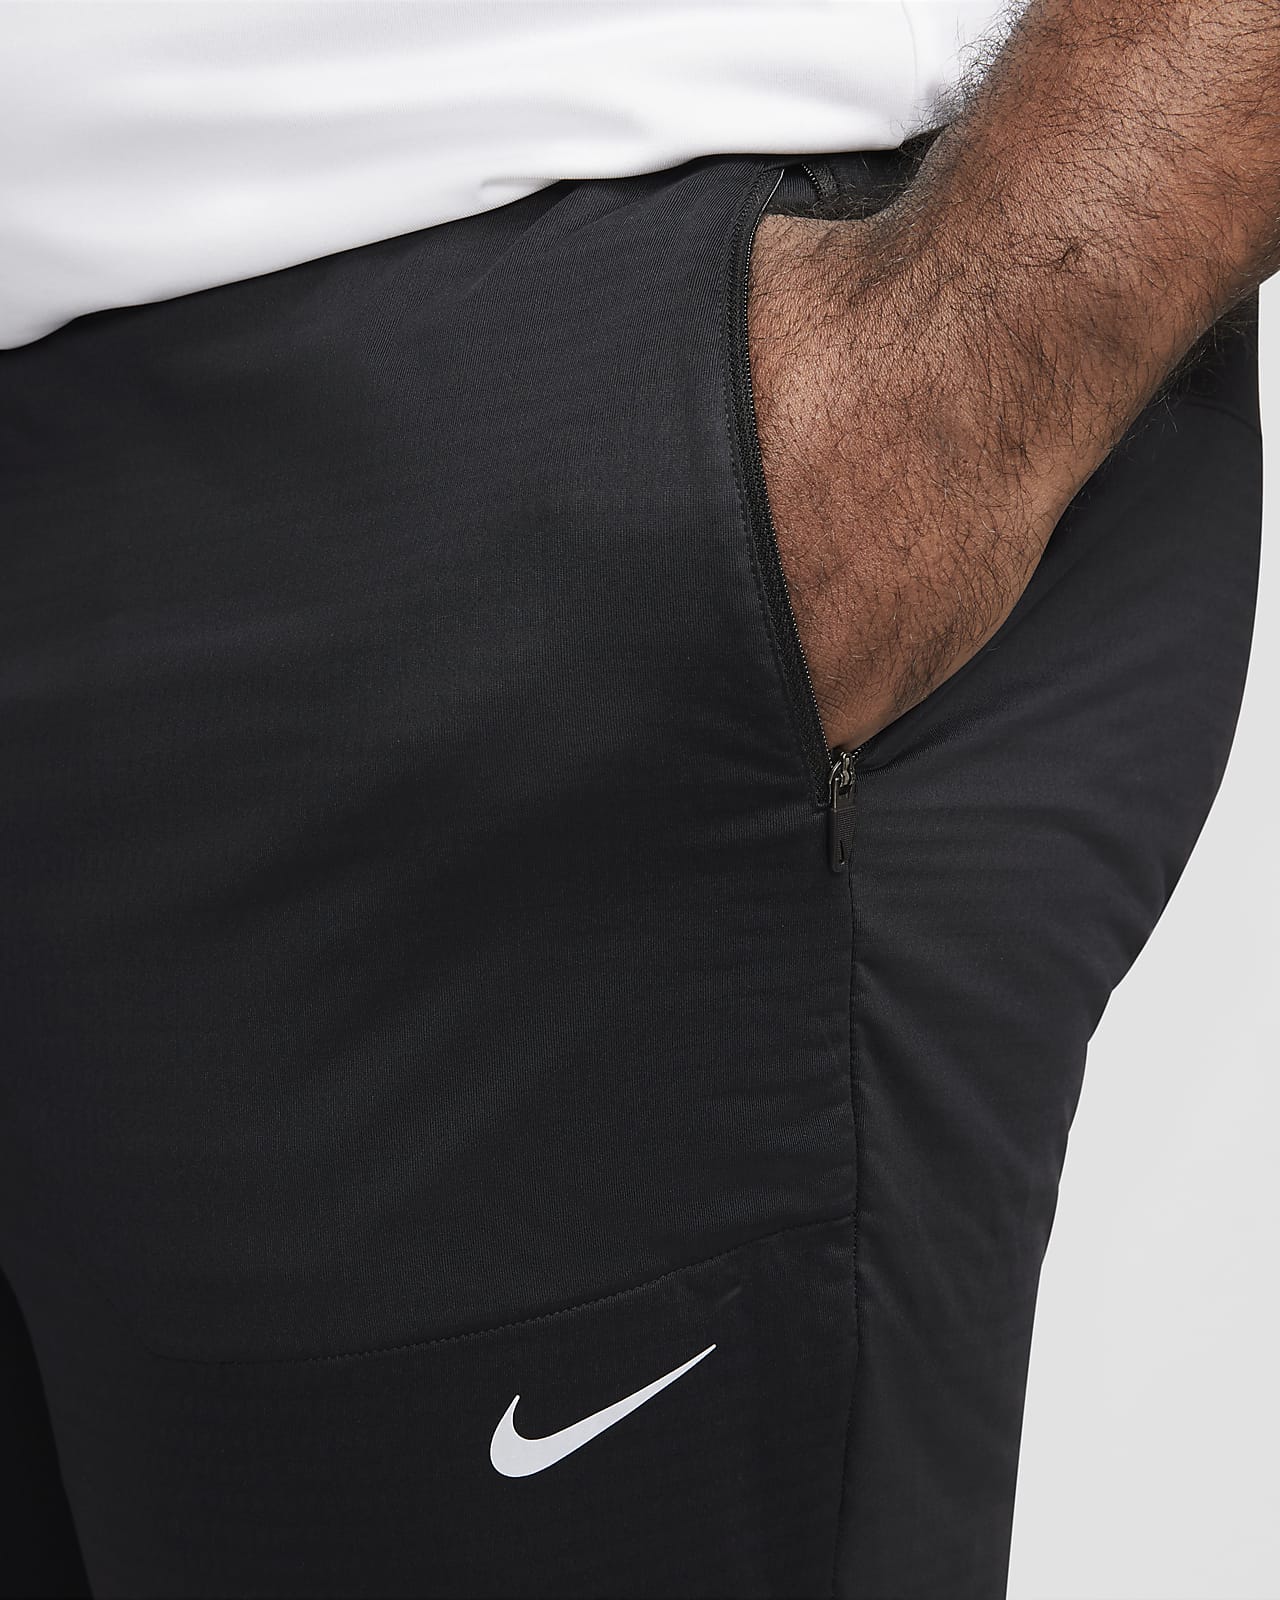 Nike phenom elite pants - Depop